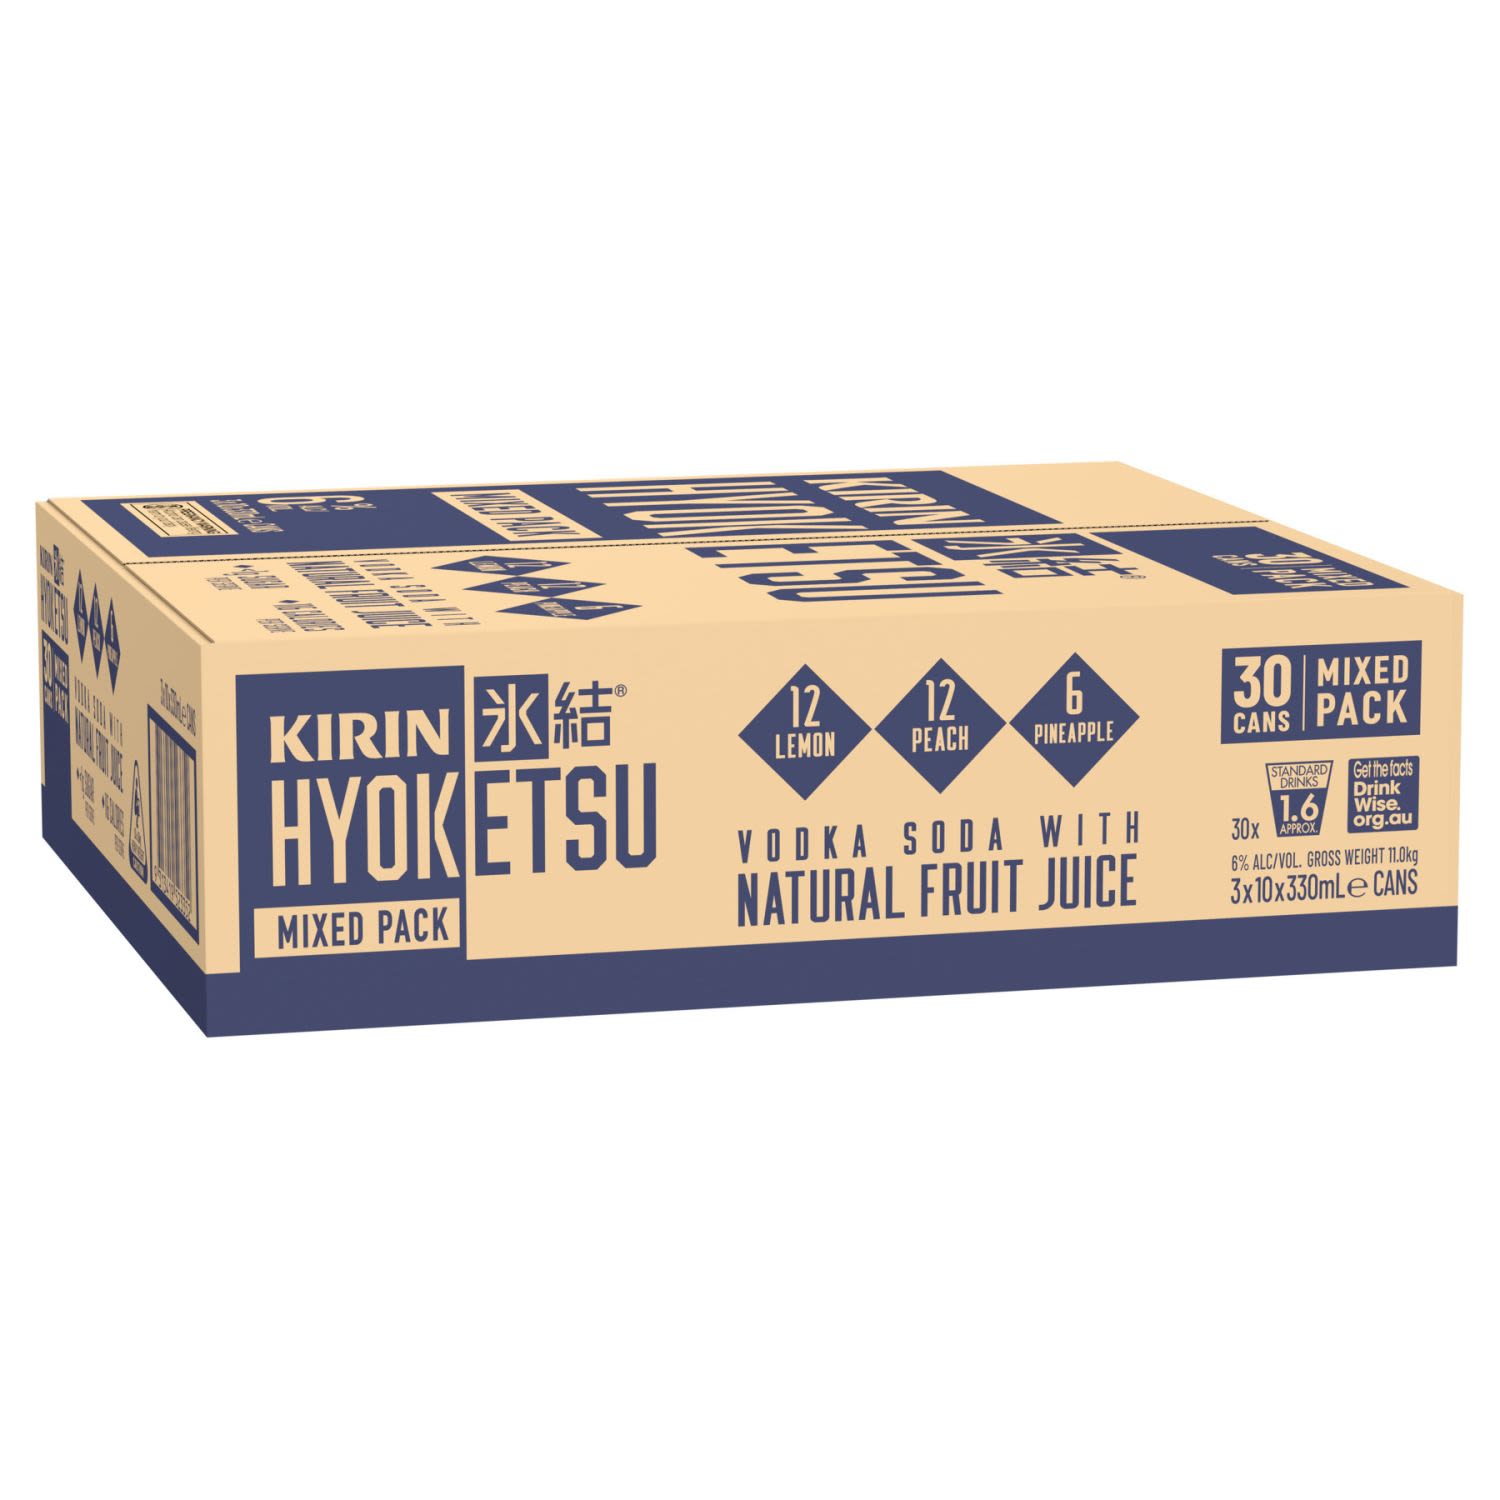 Kirin Hyoketsu Mixed Pack 30x330mL Can